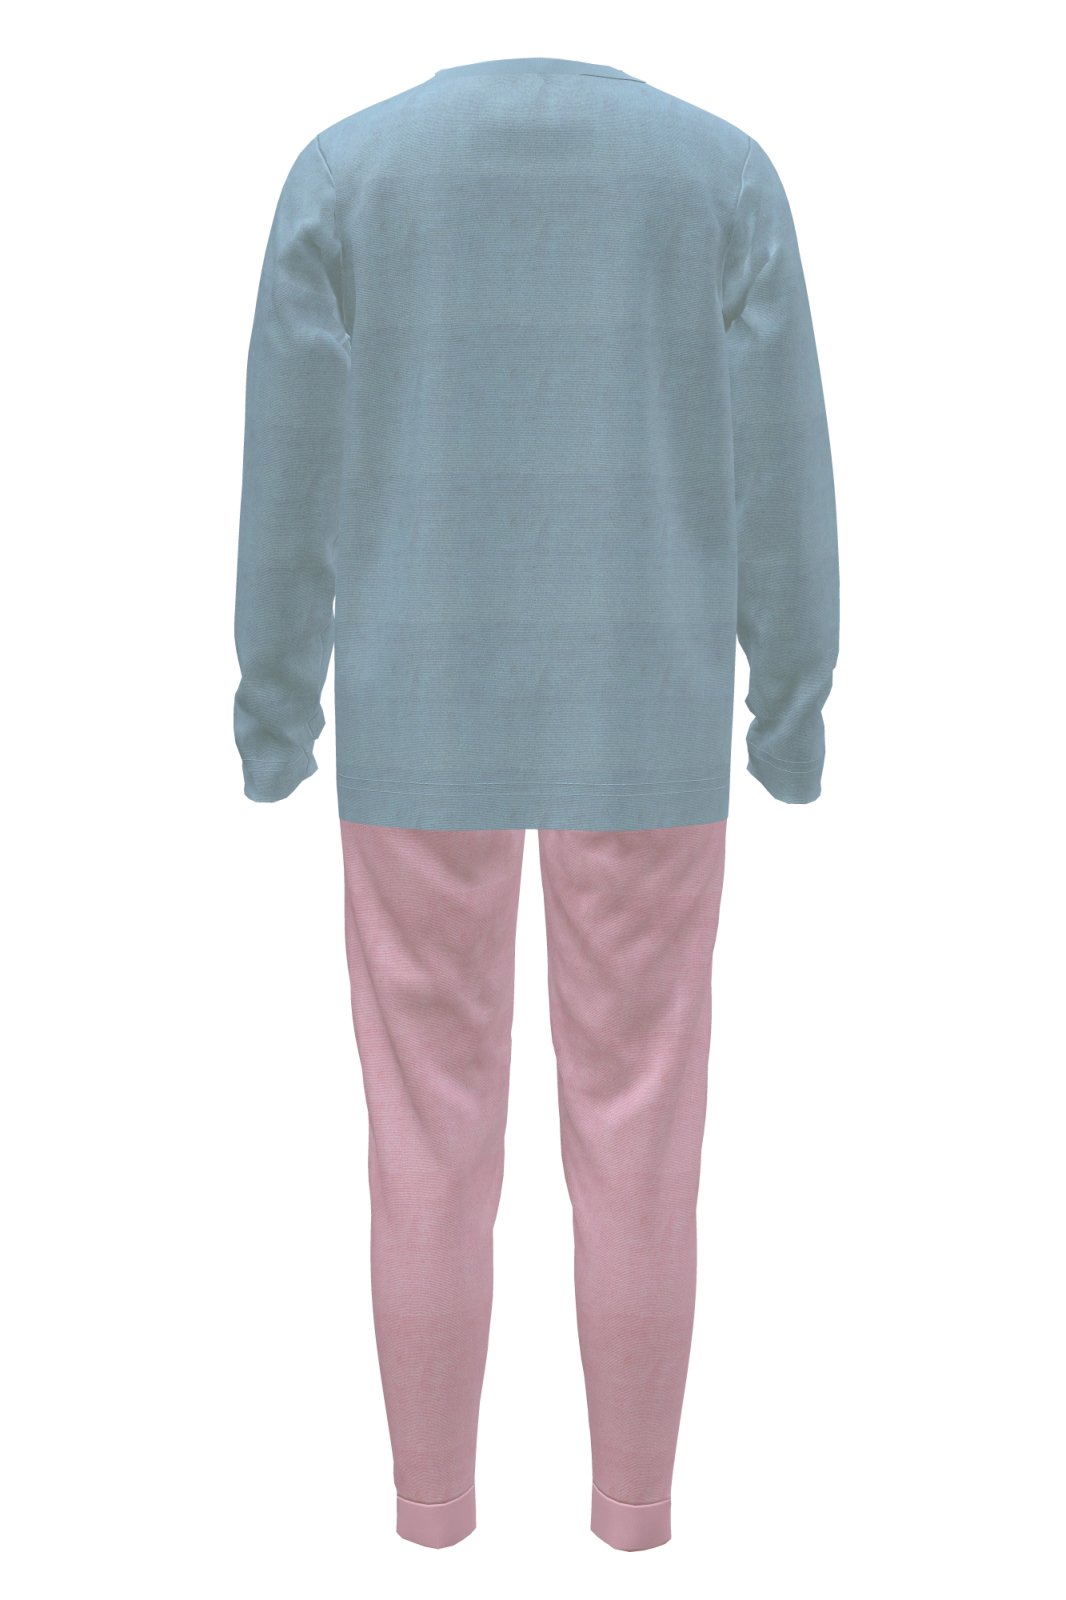 Paw Patrol Girls Pyjamas Long Sleeved Kids Pyjamas Sets Official Merchandise - Brand Threads